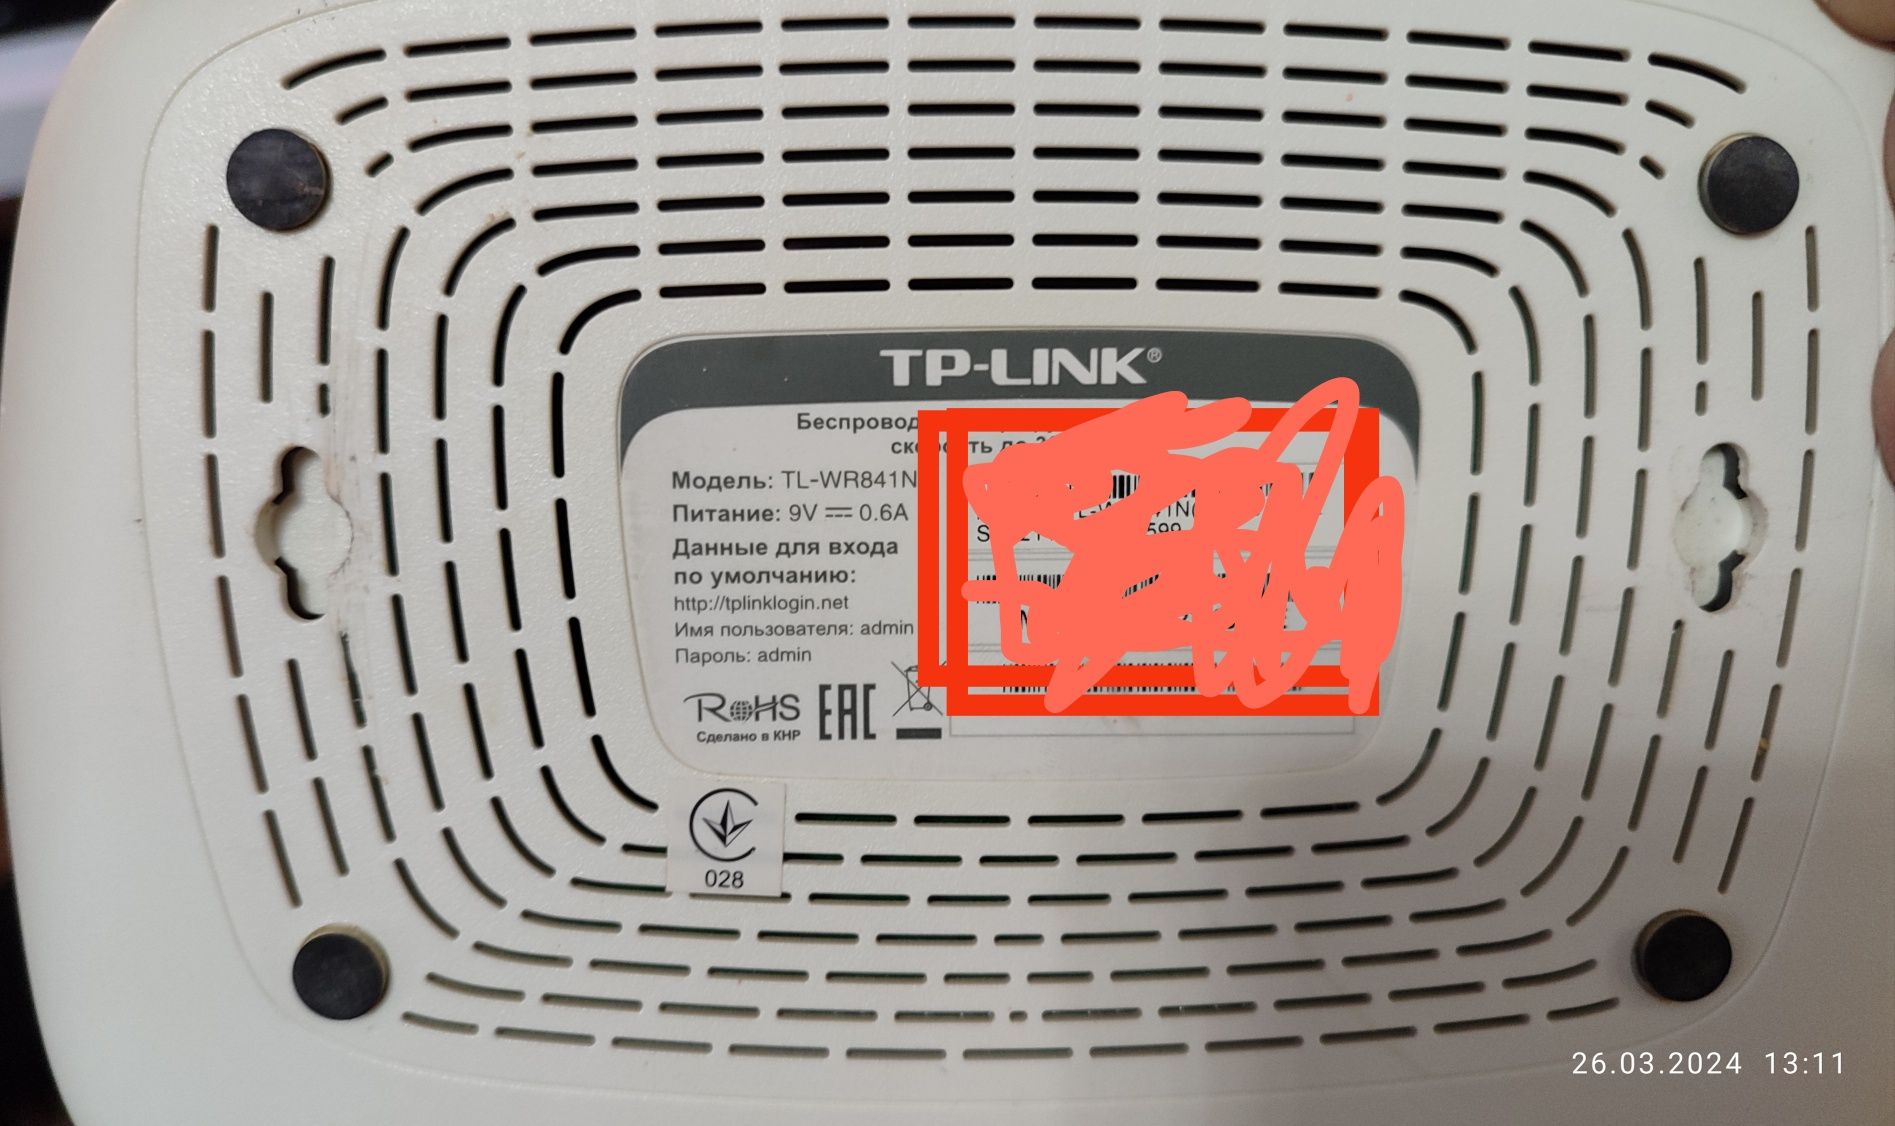 Роутер маршрутизатор TP-LINK 841